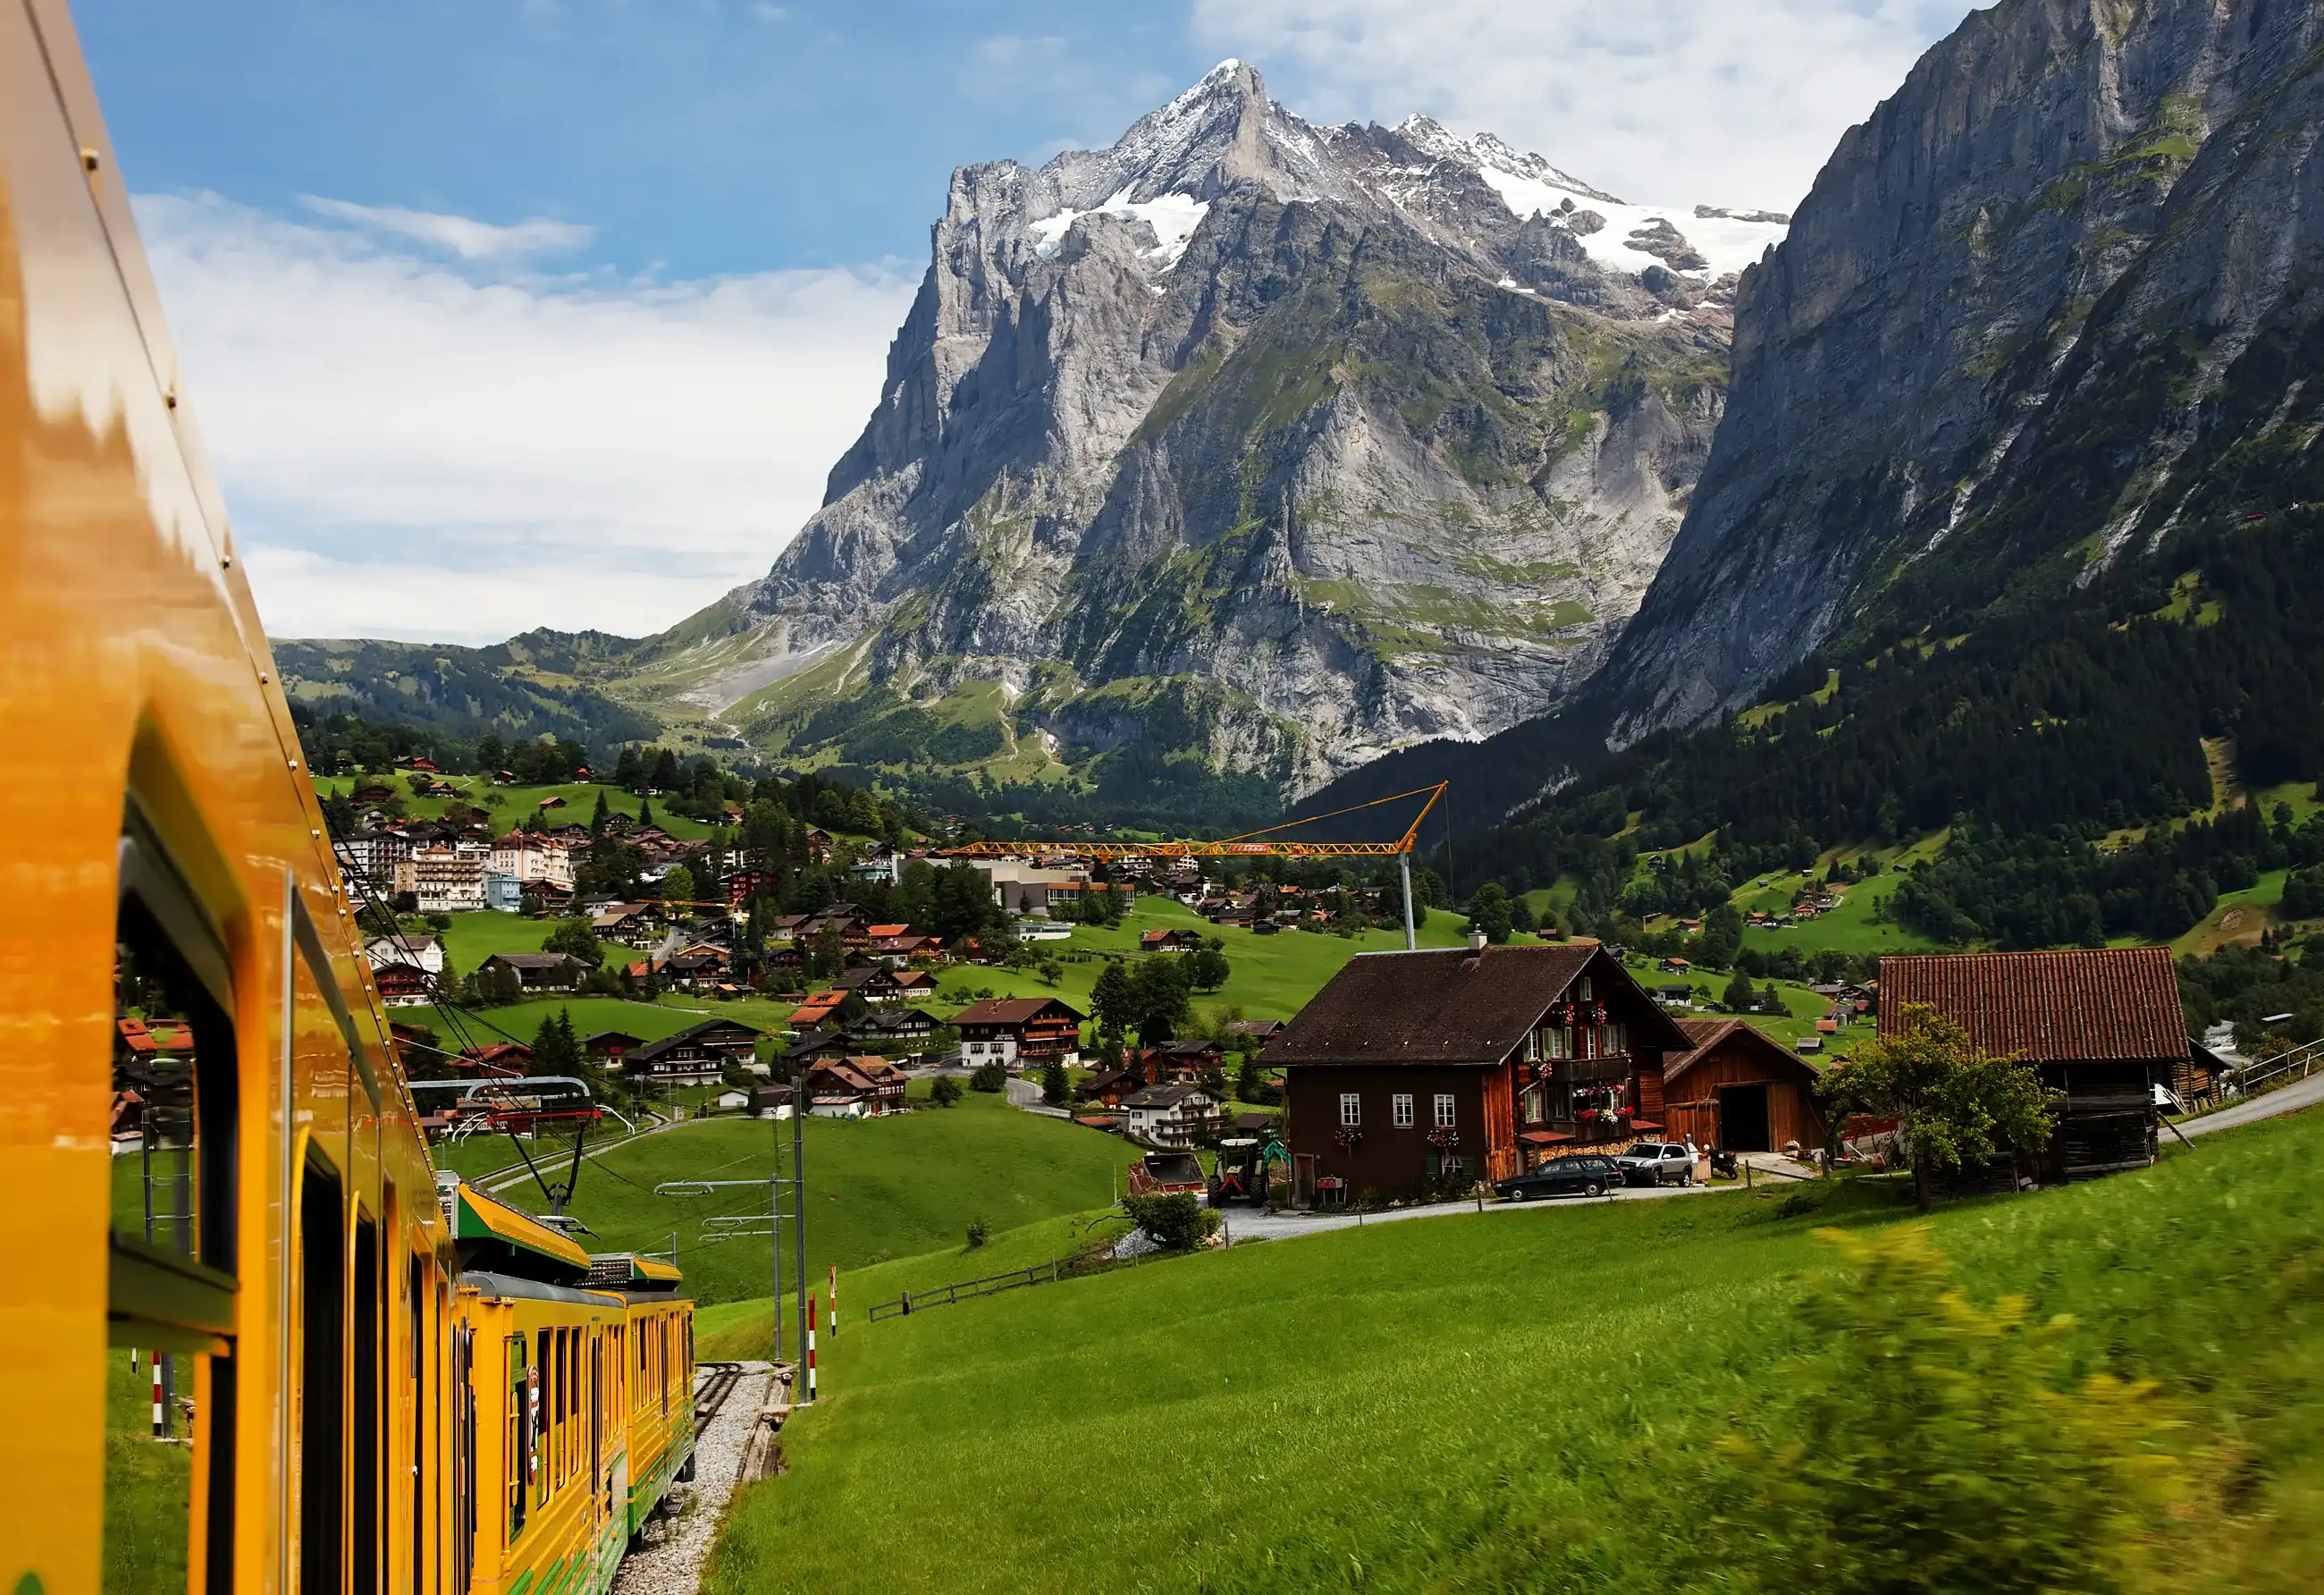 Best Grindelwald hotels. Cheap hotels in Grindelwald, Switzerland